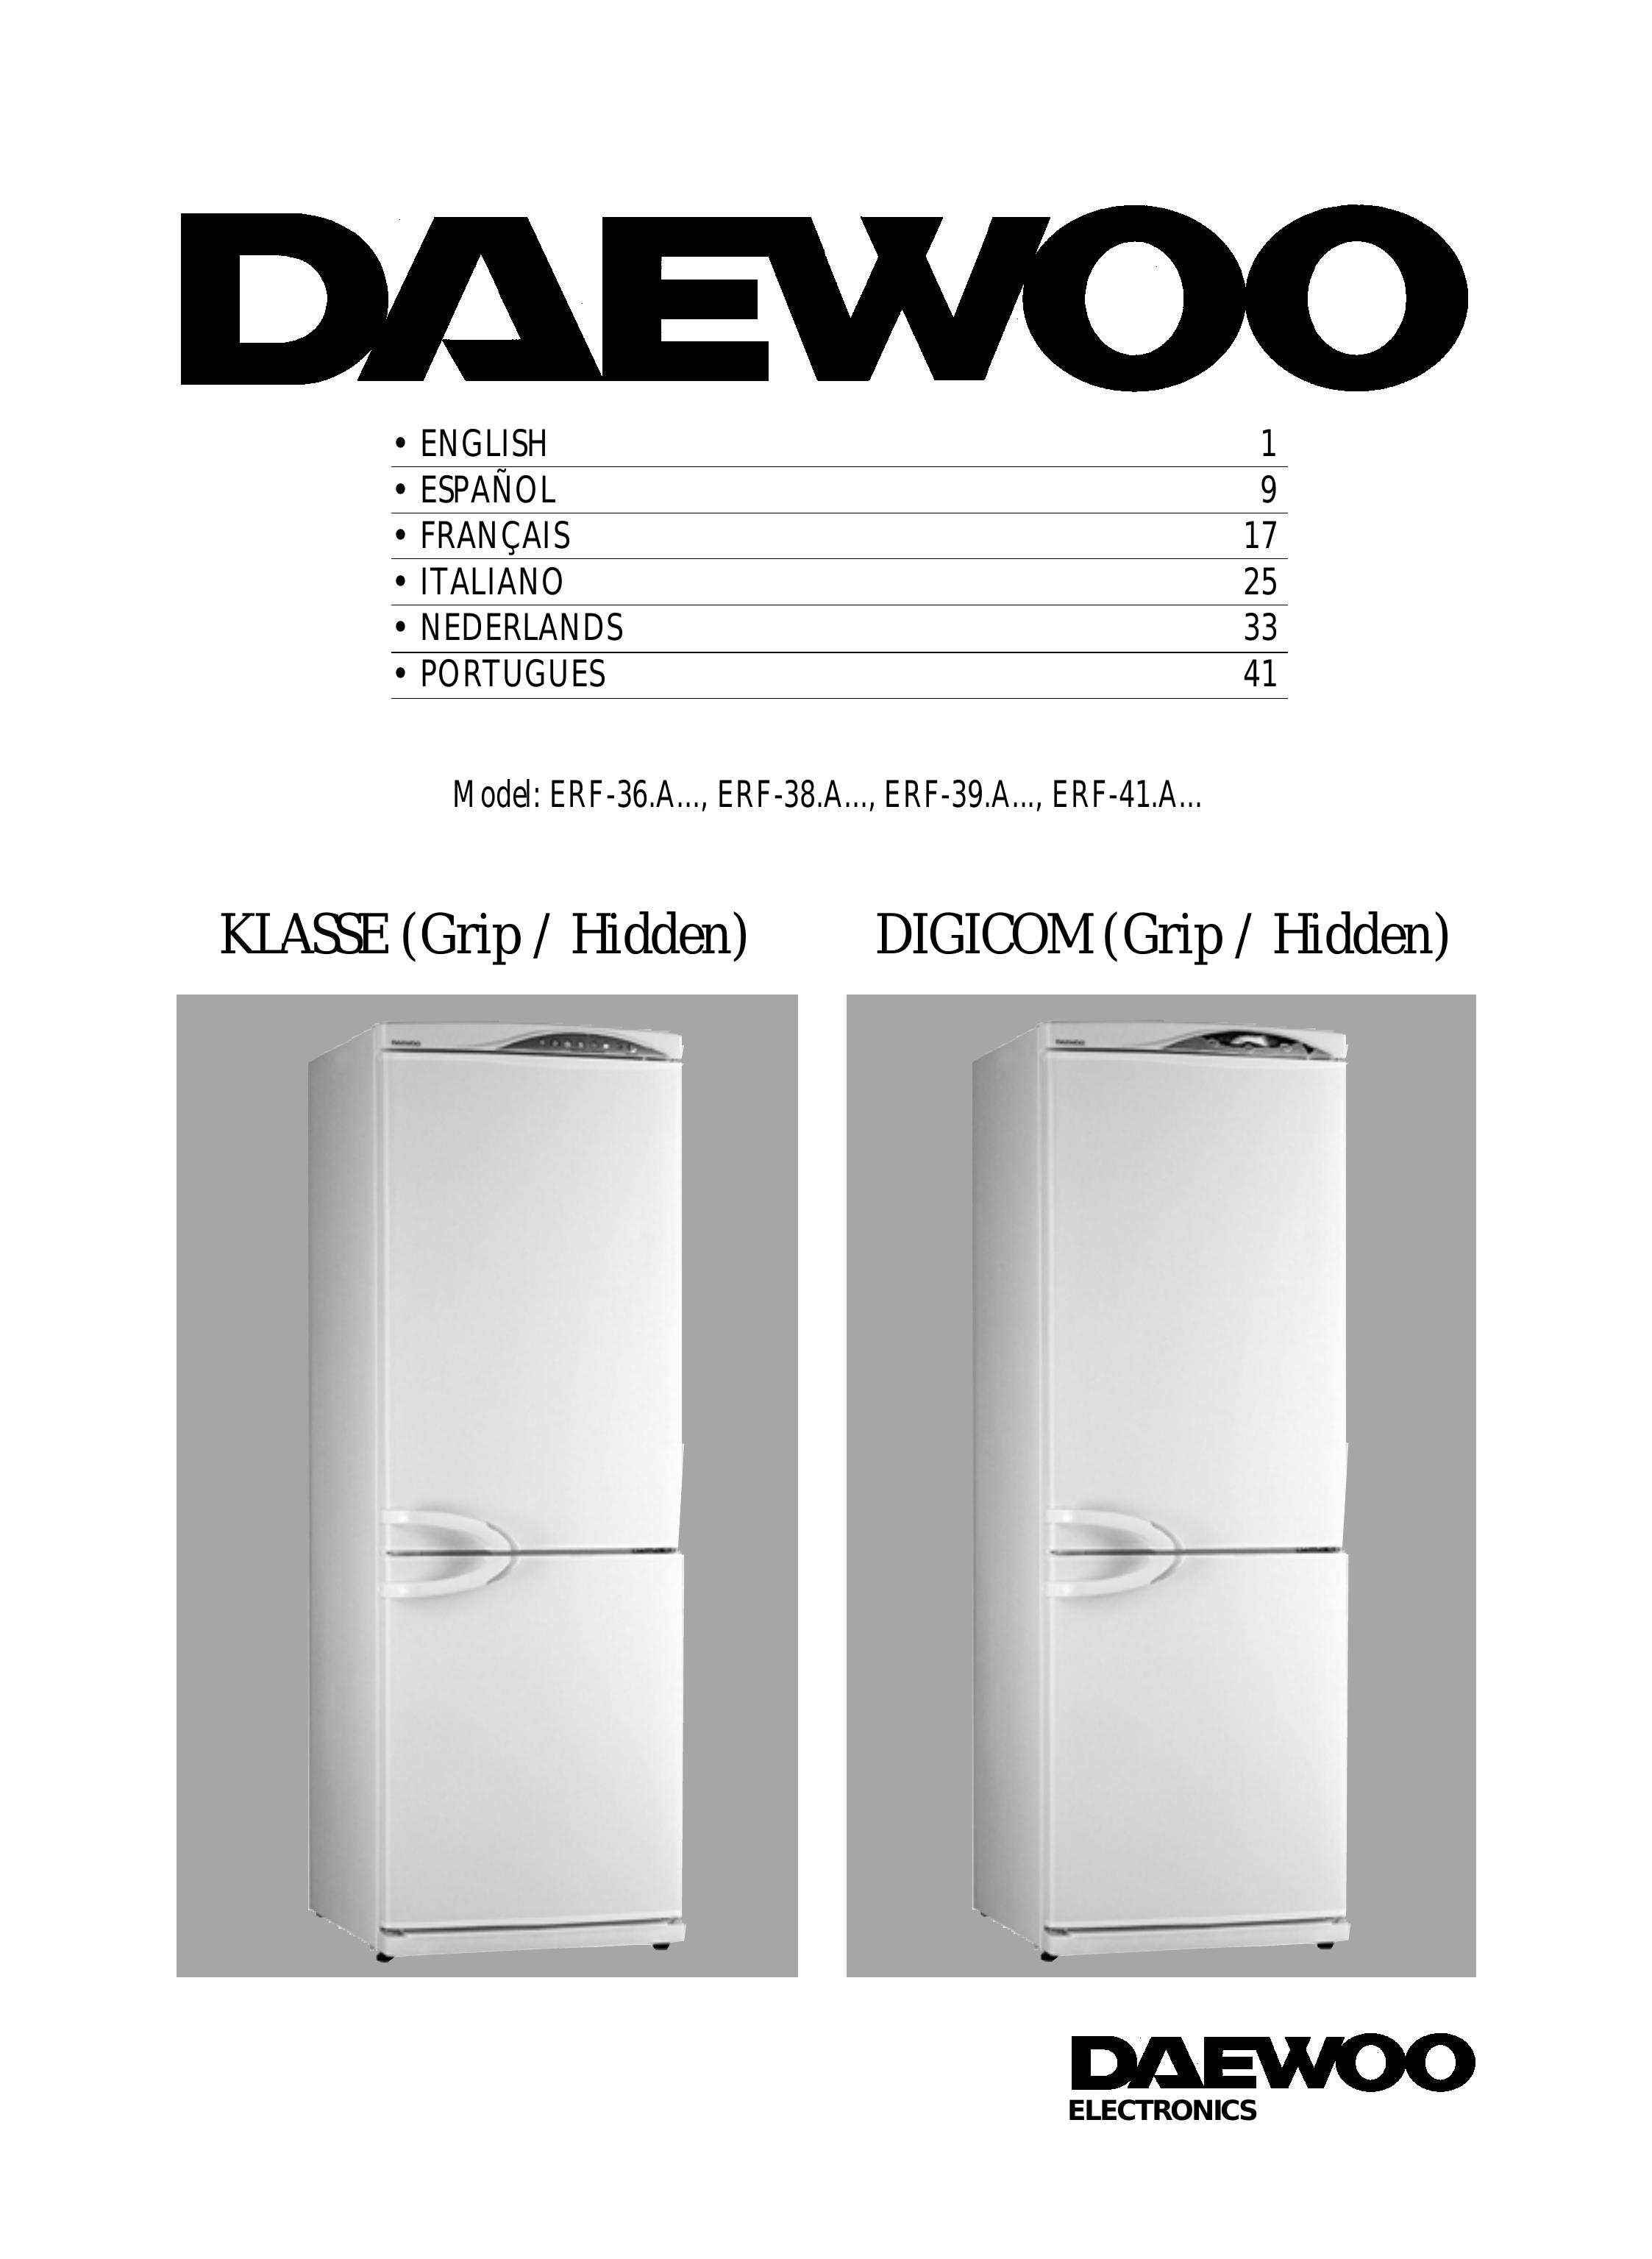 Daewoo ERF-38.A Refrigerator User Manual